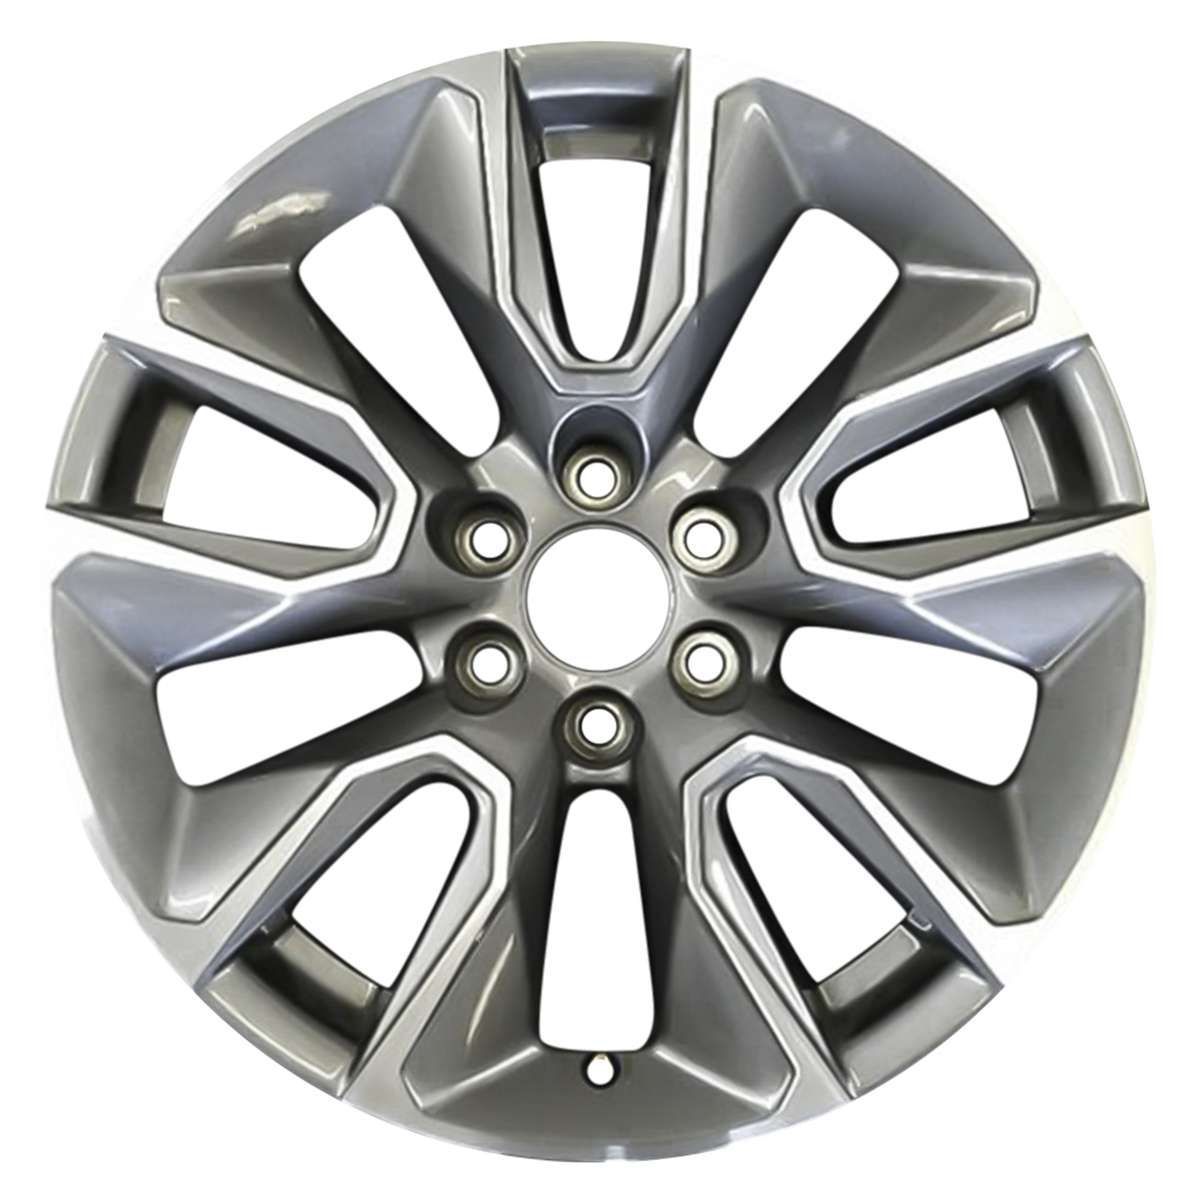 2021 Chevrolet Silverado 1500 New 20" Replacement Wheel Rim RW5916MC